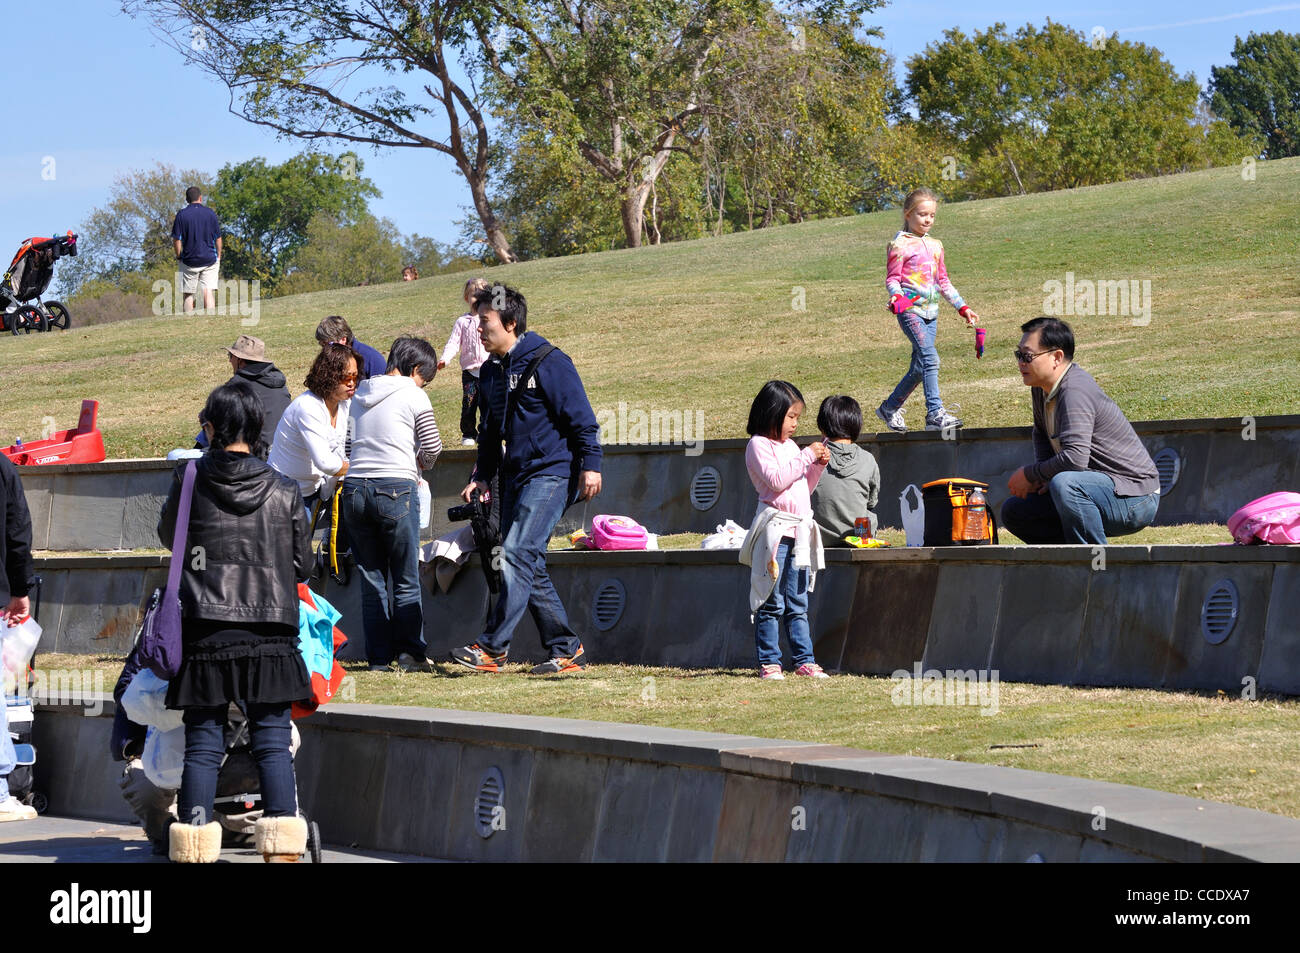 Dallas Arboretum, Texas, USA - Asian people in park Stock Photo